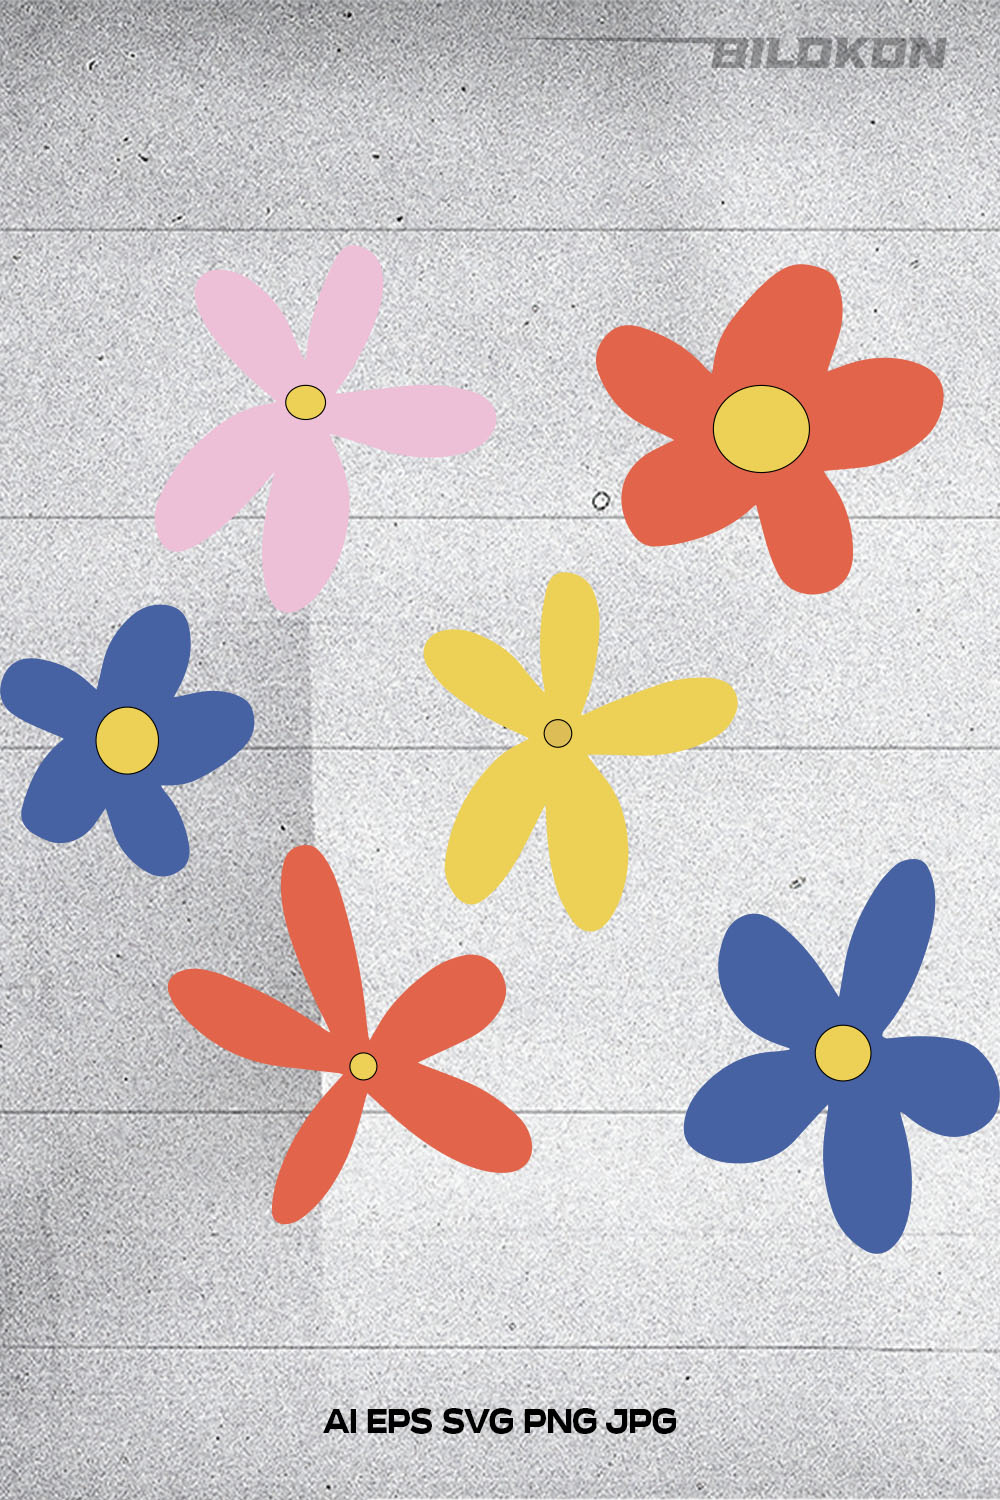 Flower cartoon set icon, SVG Vector illustration pinterest preview image.